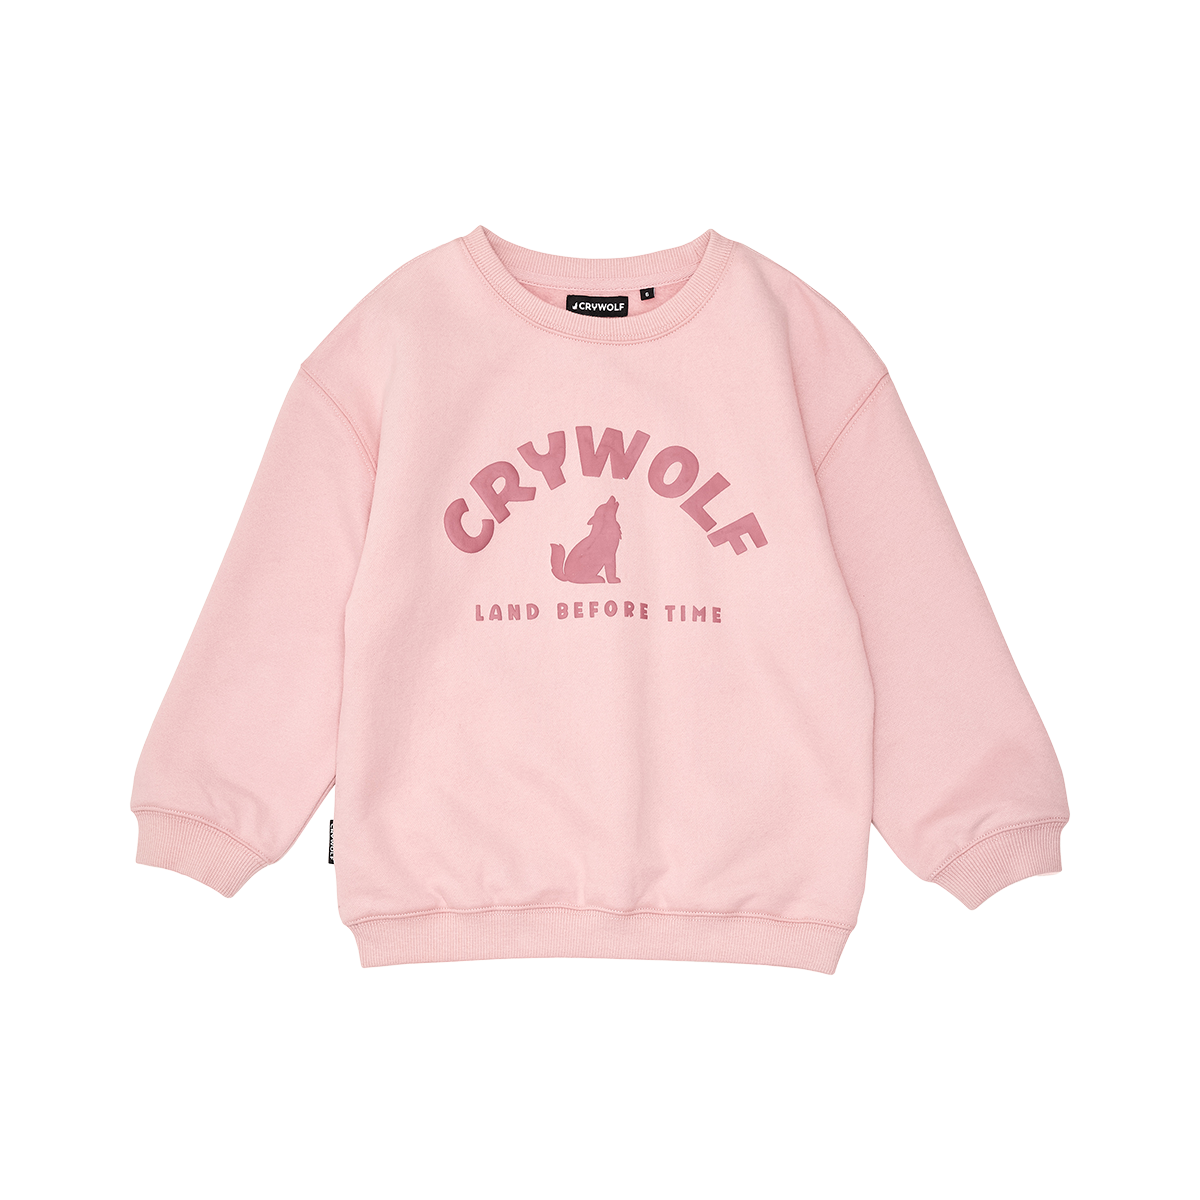 Crywolf Chill Sweater Blush